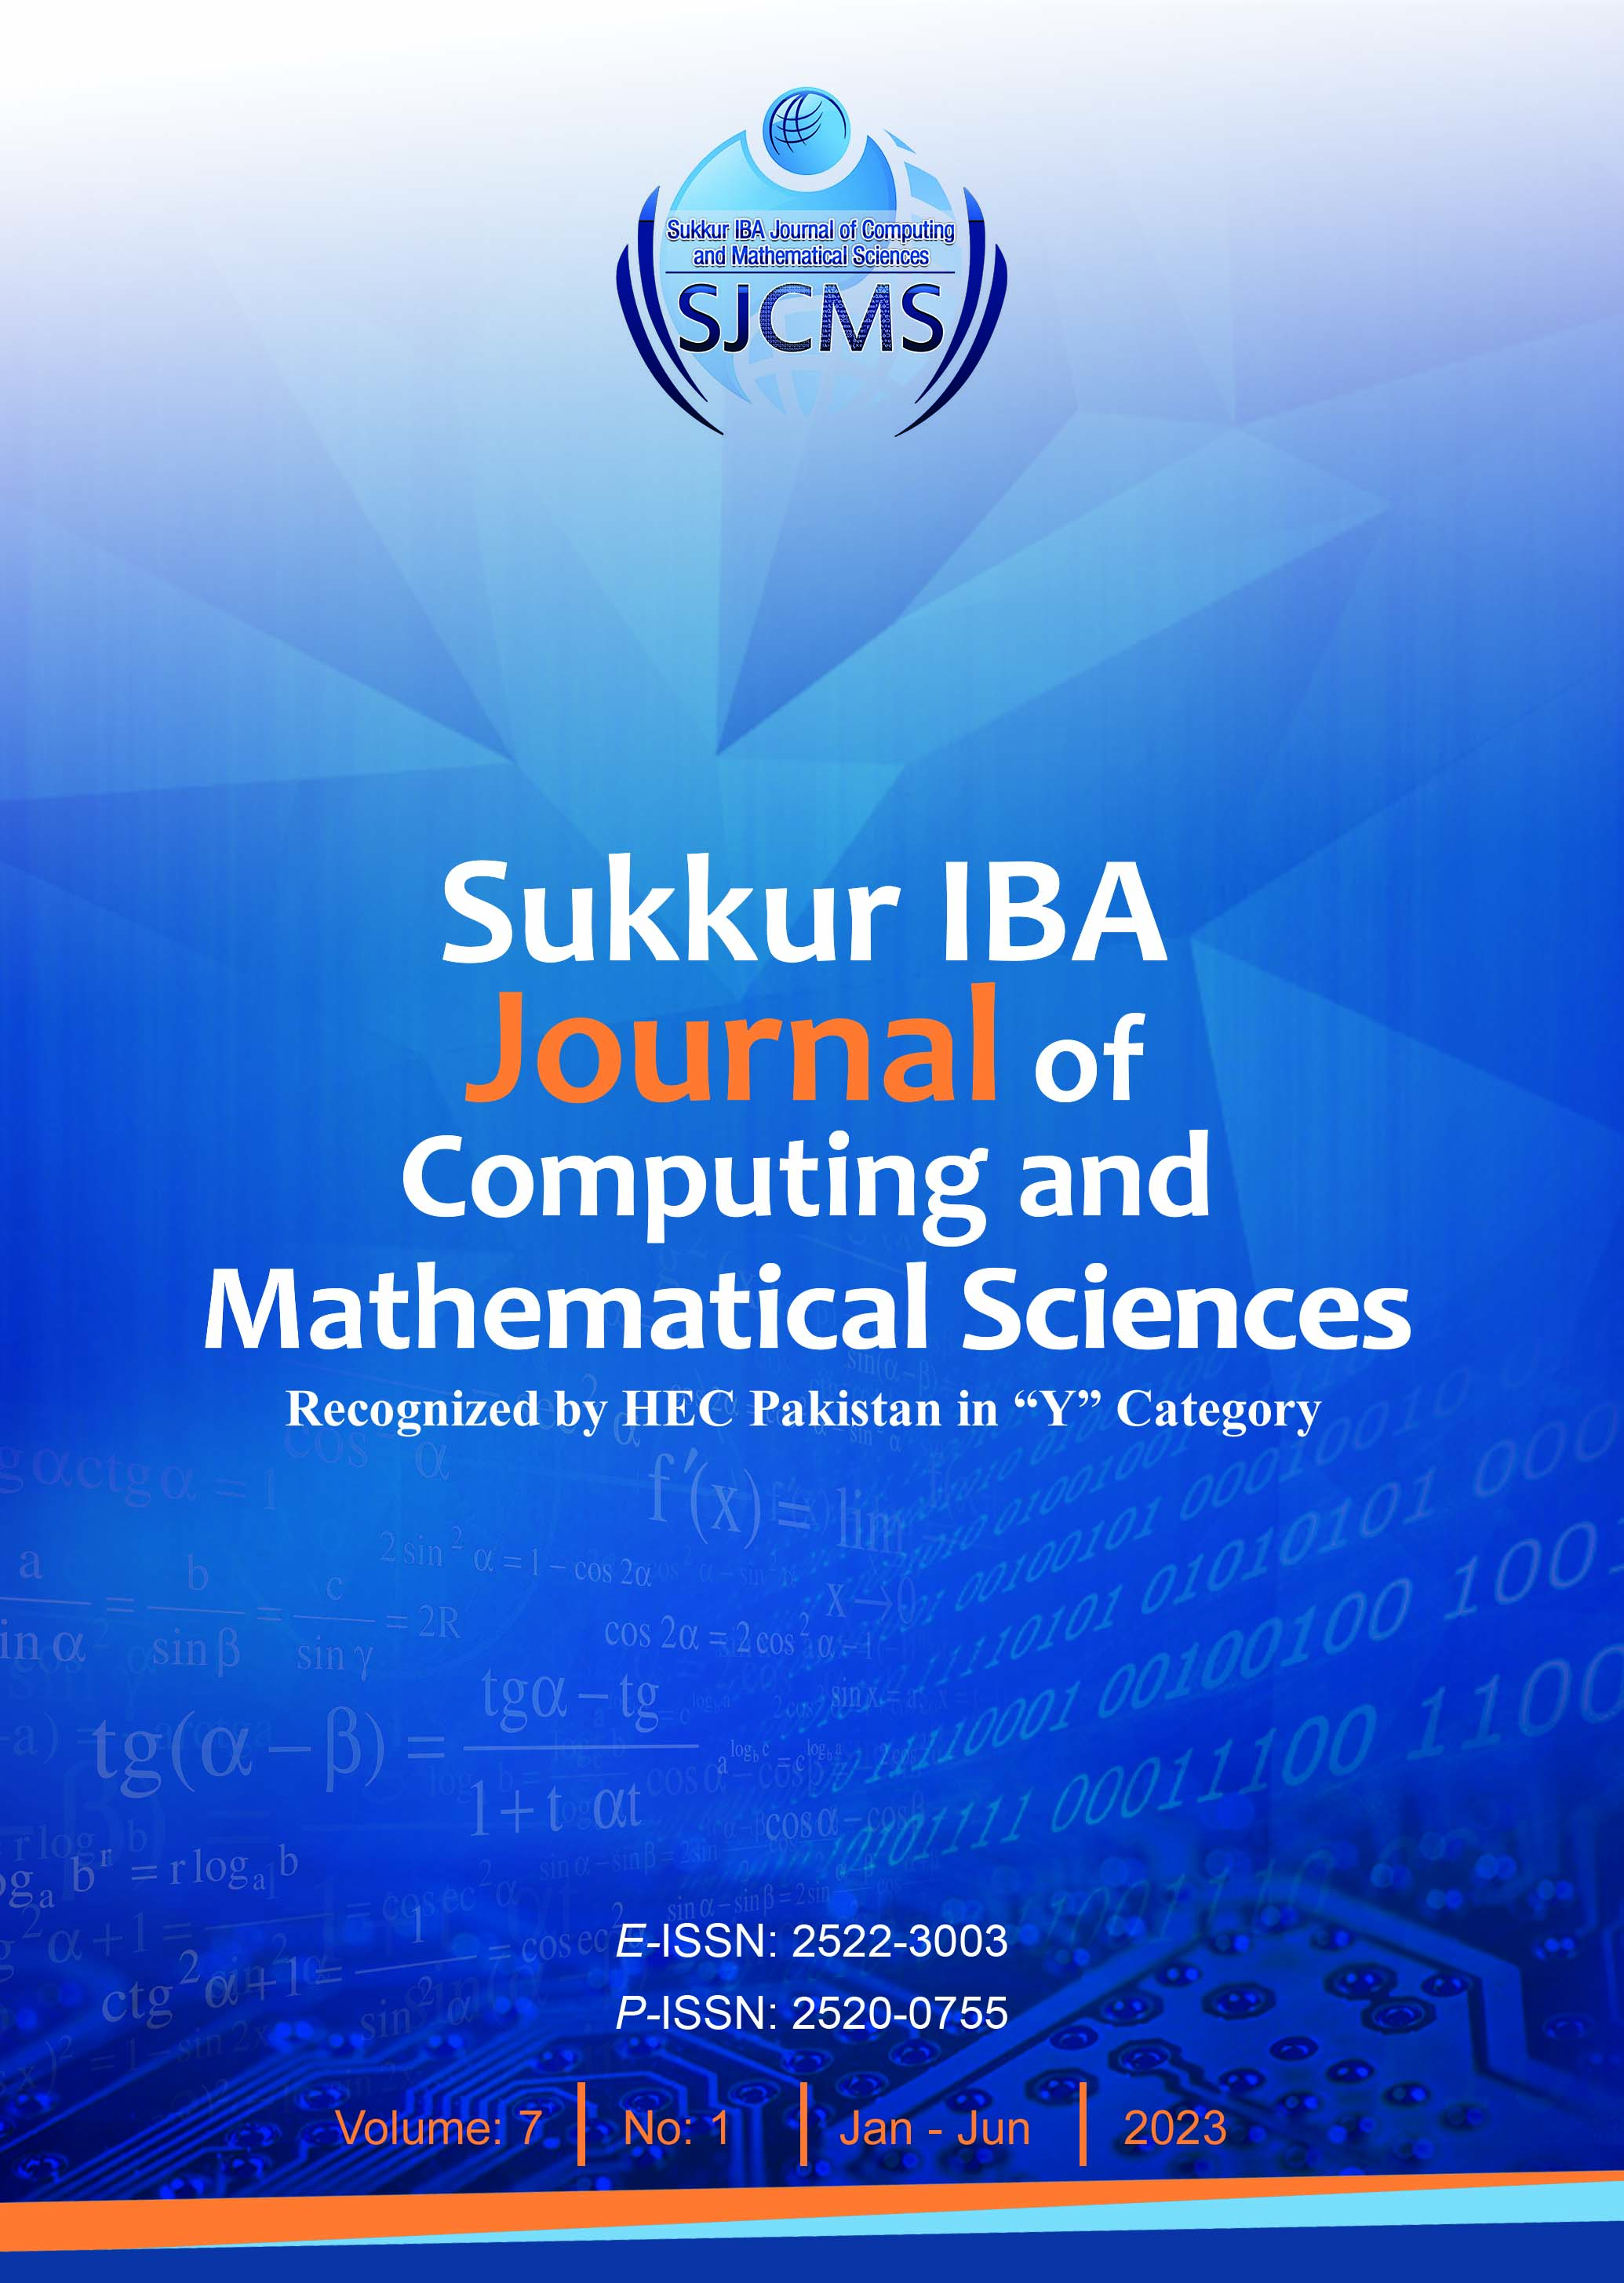 					View Vol. 7 No. 1 (2023): Sukkur IBA Journal of Computing and Mathematical Science -Vol. 7, No. 1 | January – June 2023
				